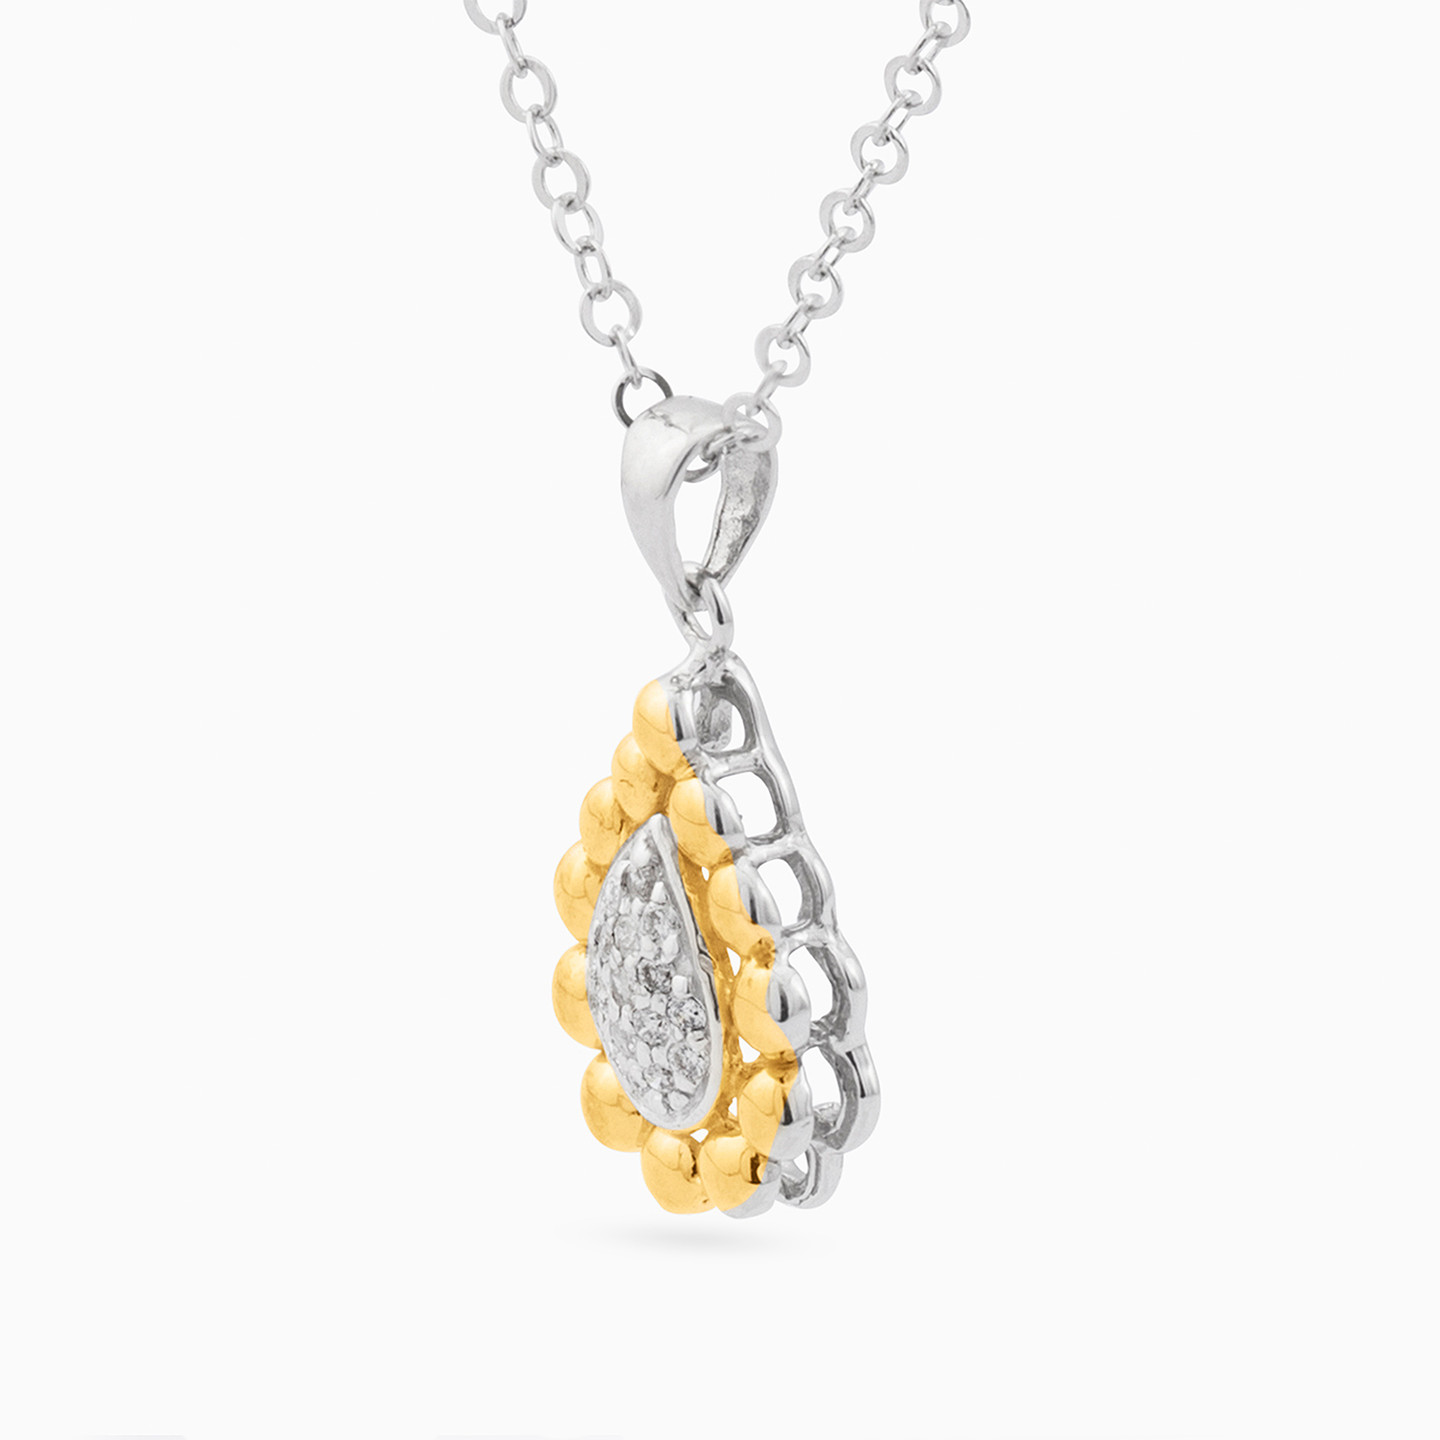 18K Gold Cubic Zirconia Pendant Necklace - 2